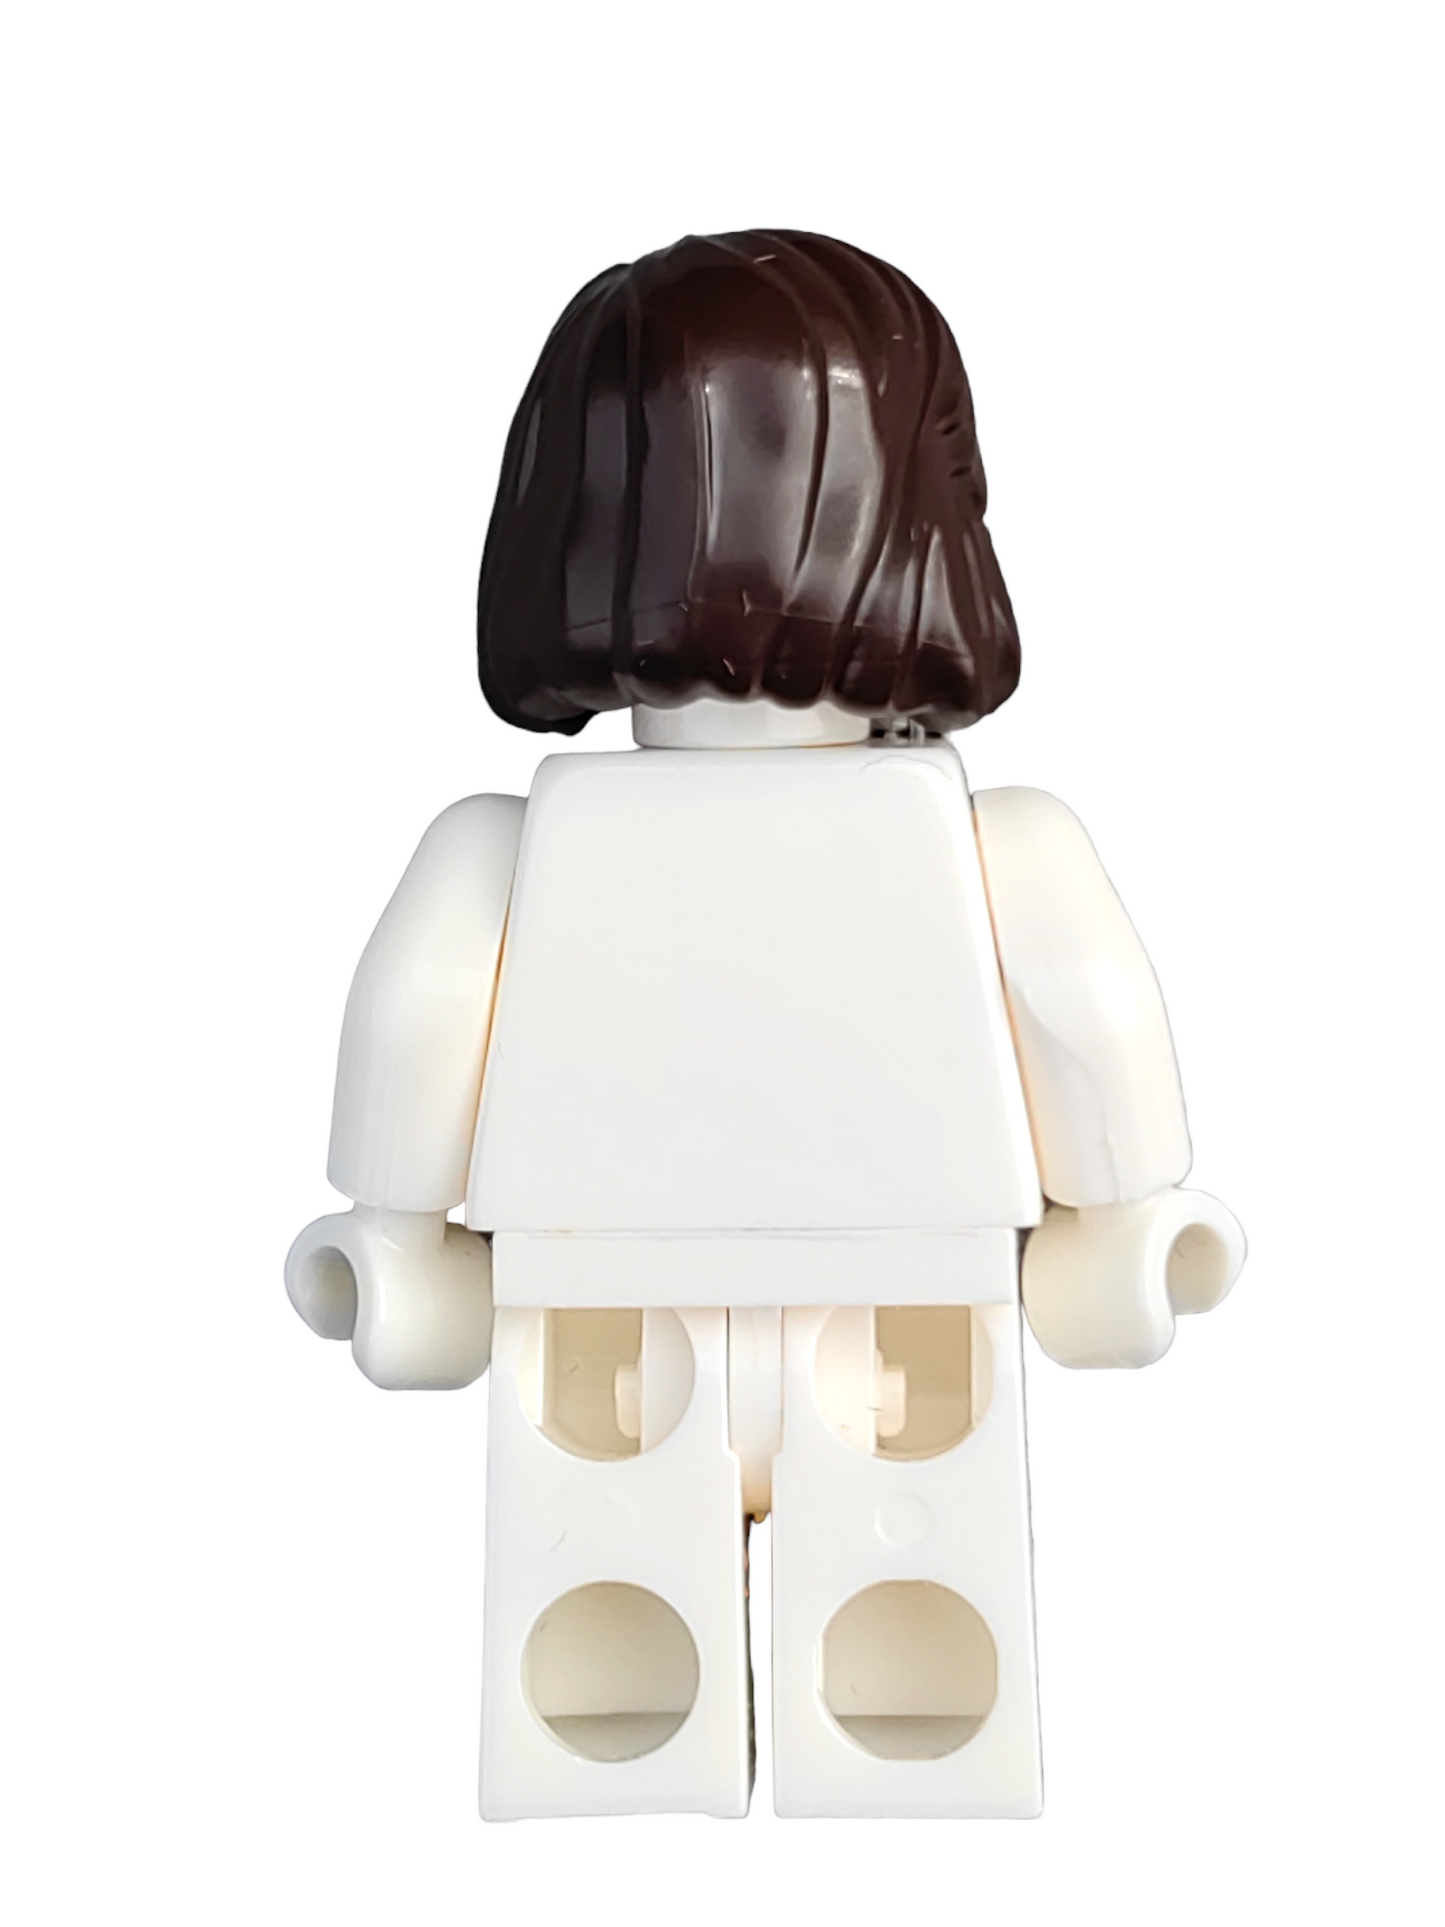 LEGO Wig, Brown Hair Medium Length Combed Back Behind the Ears - UB1237